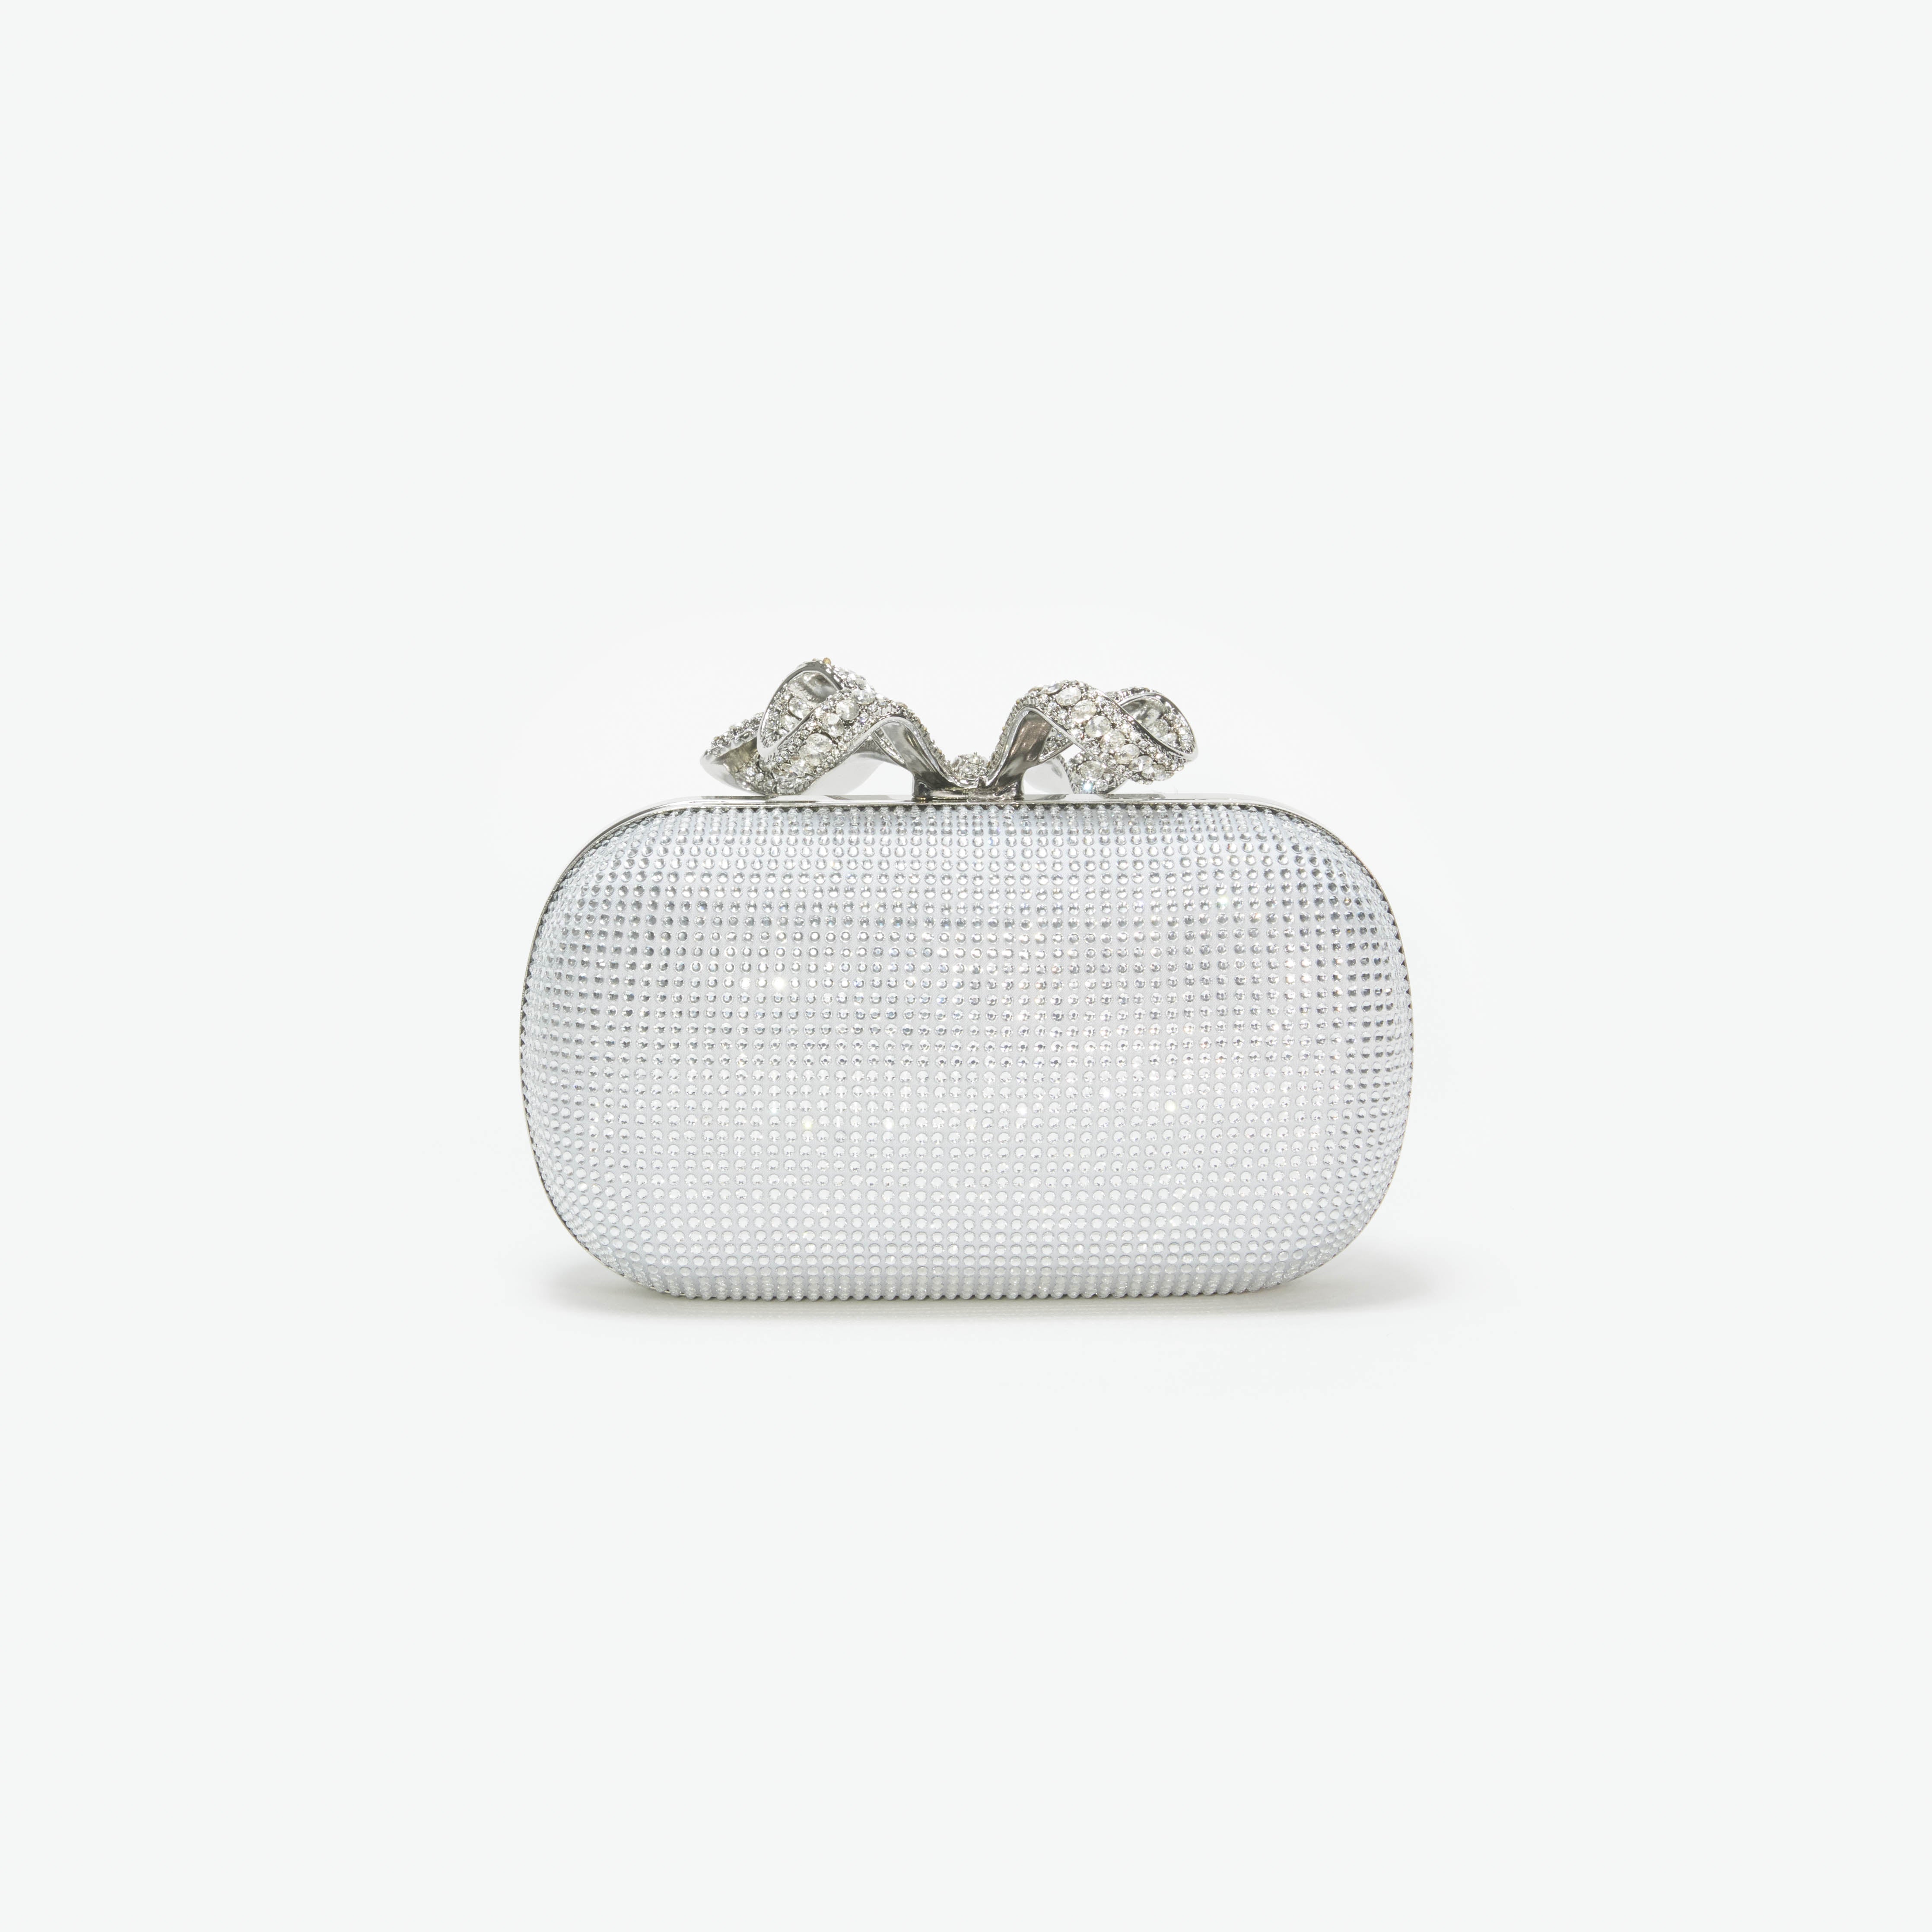 Buy the Lotus ladies' Chandra clutch bag in silver diamante online